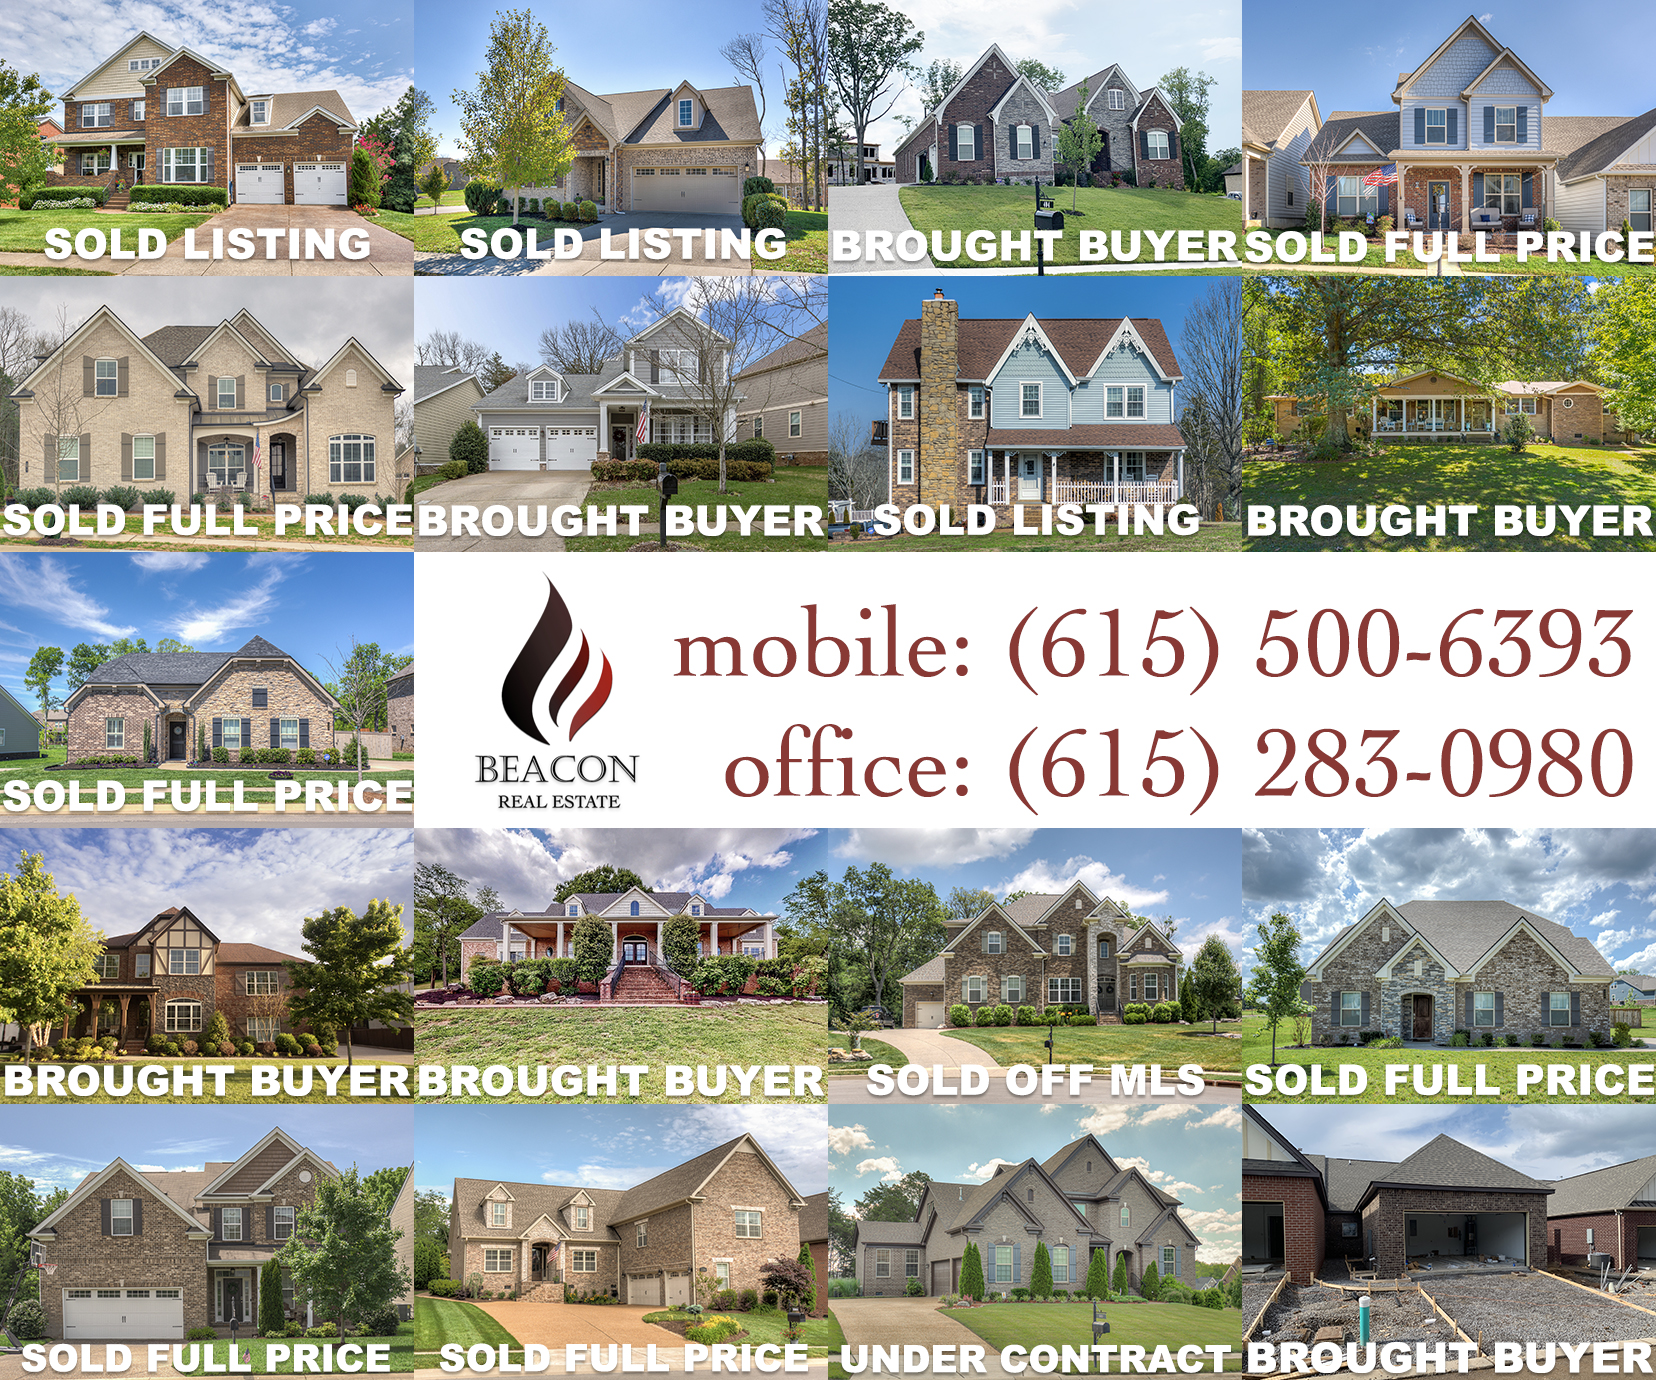 Flint Adam - Nolensville 2020 Home Sales Through August